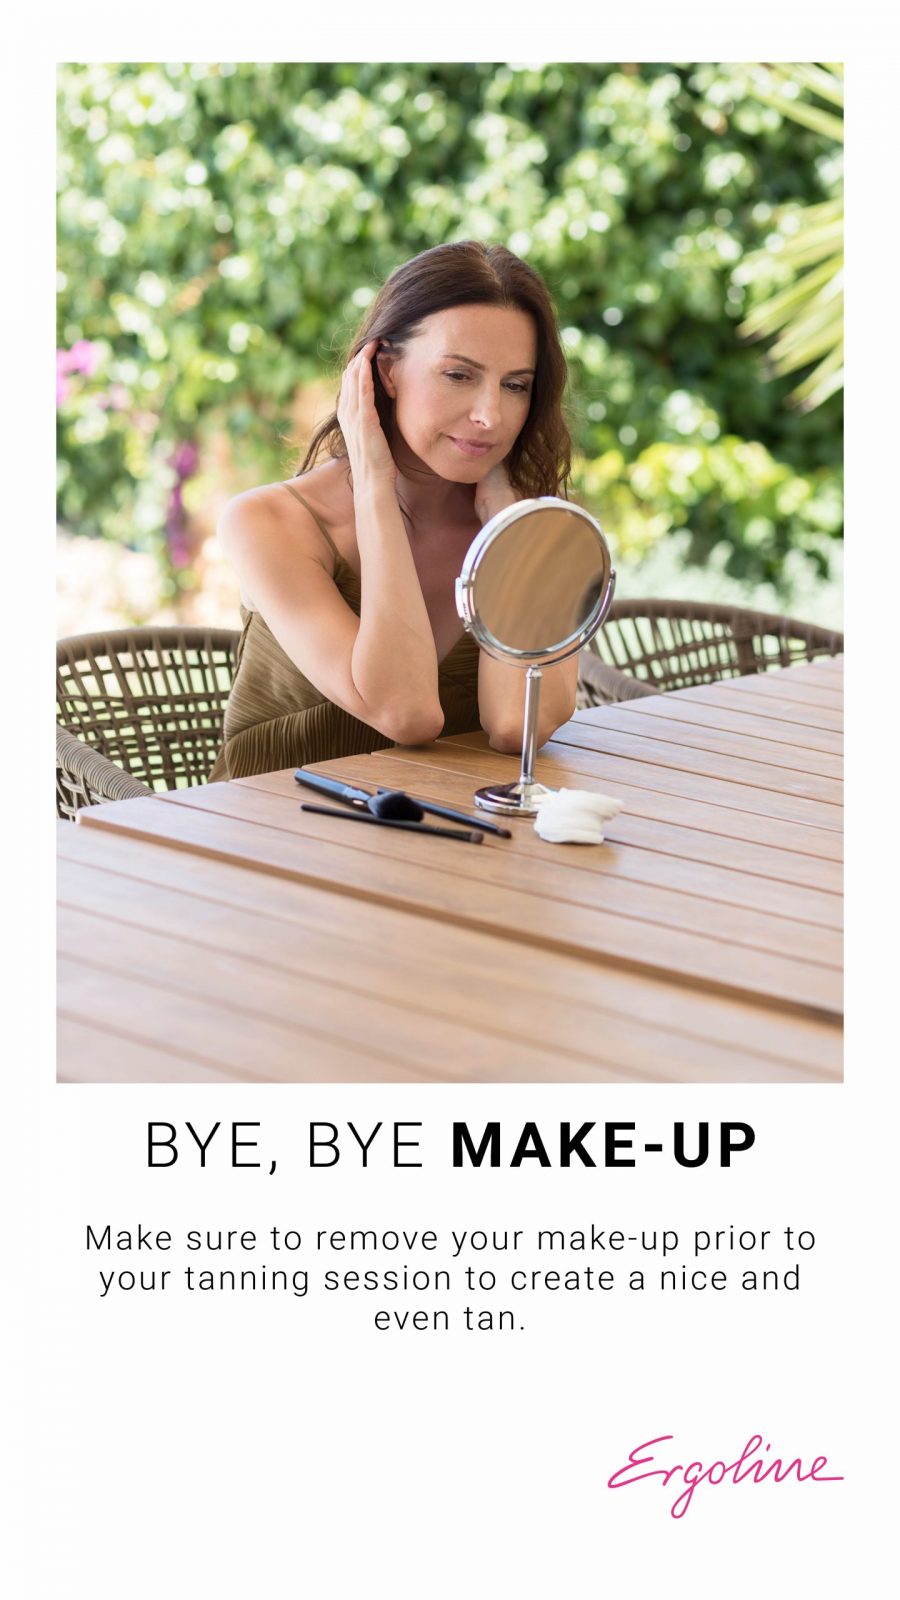 Bye, Bye Make-up